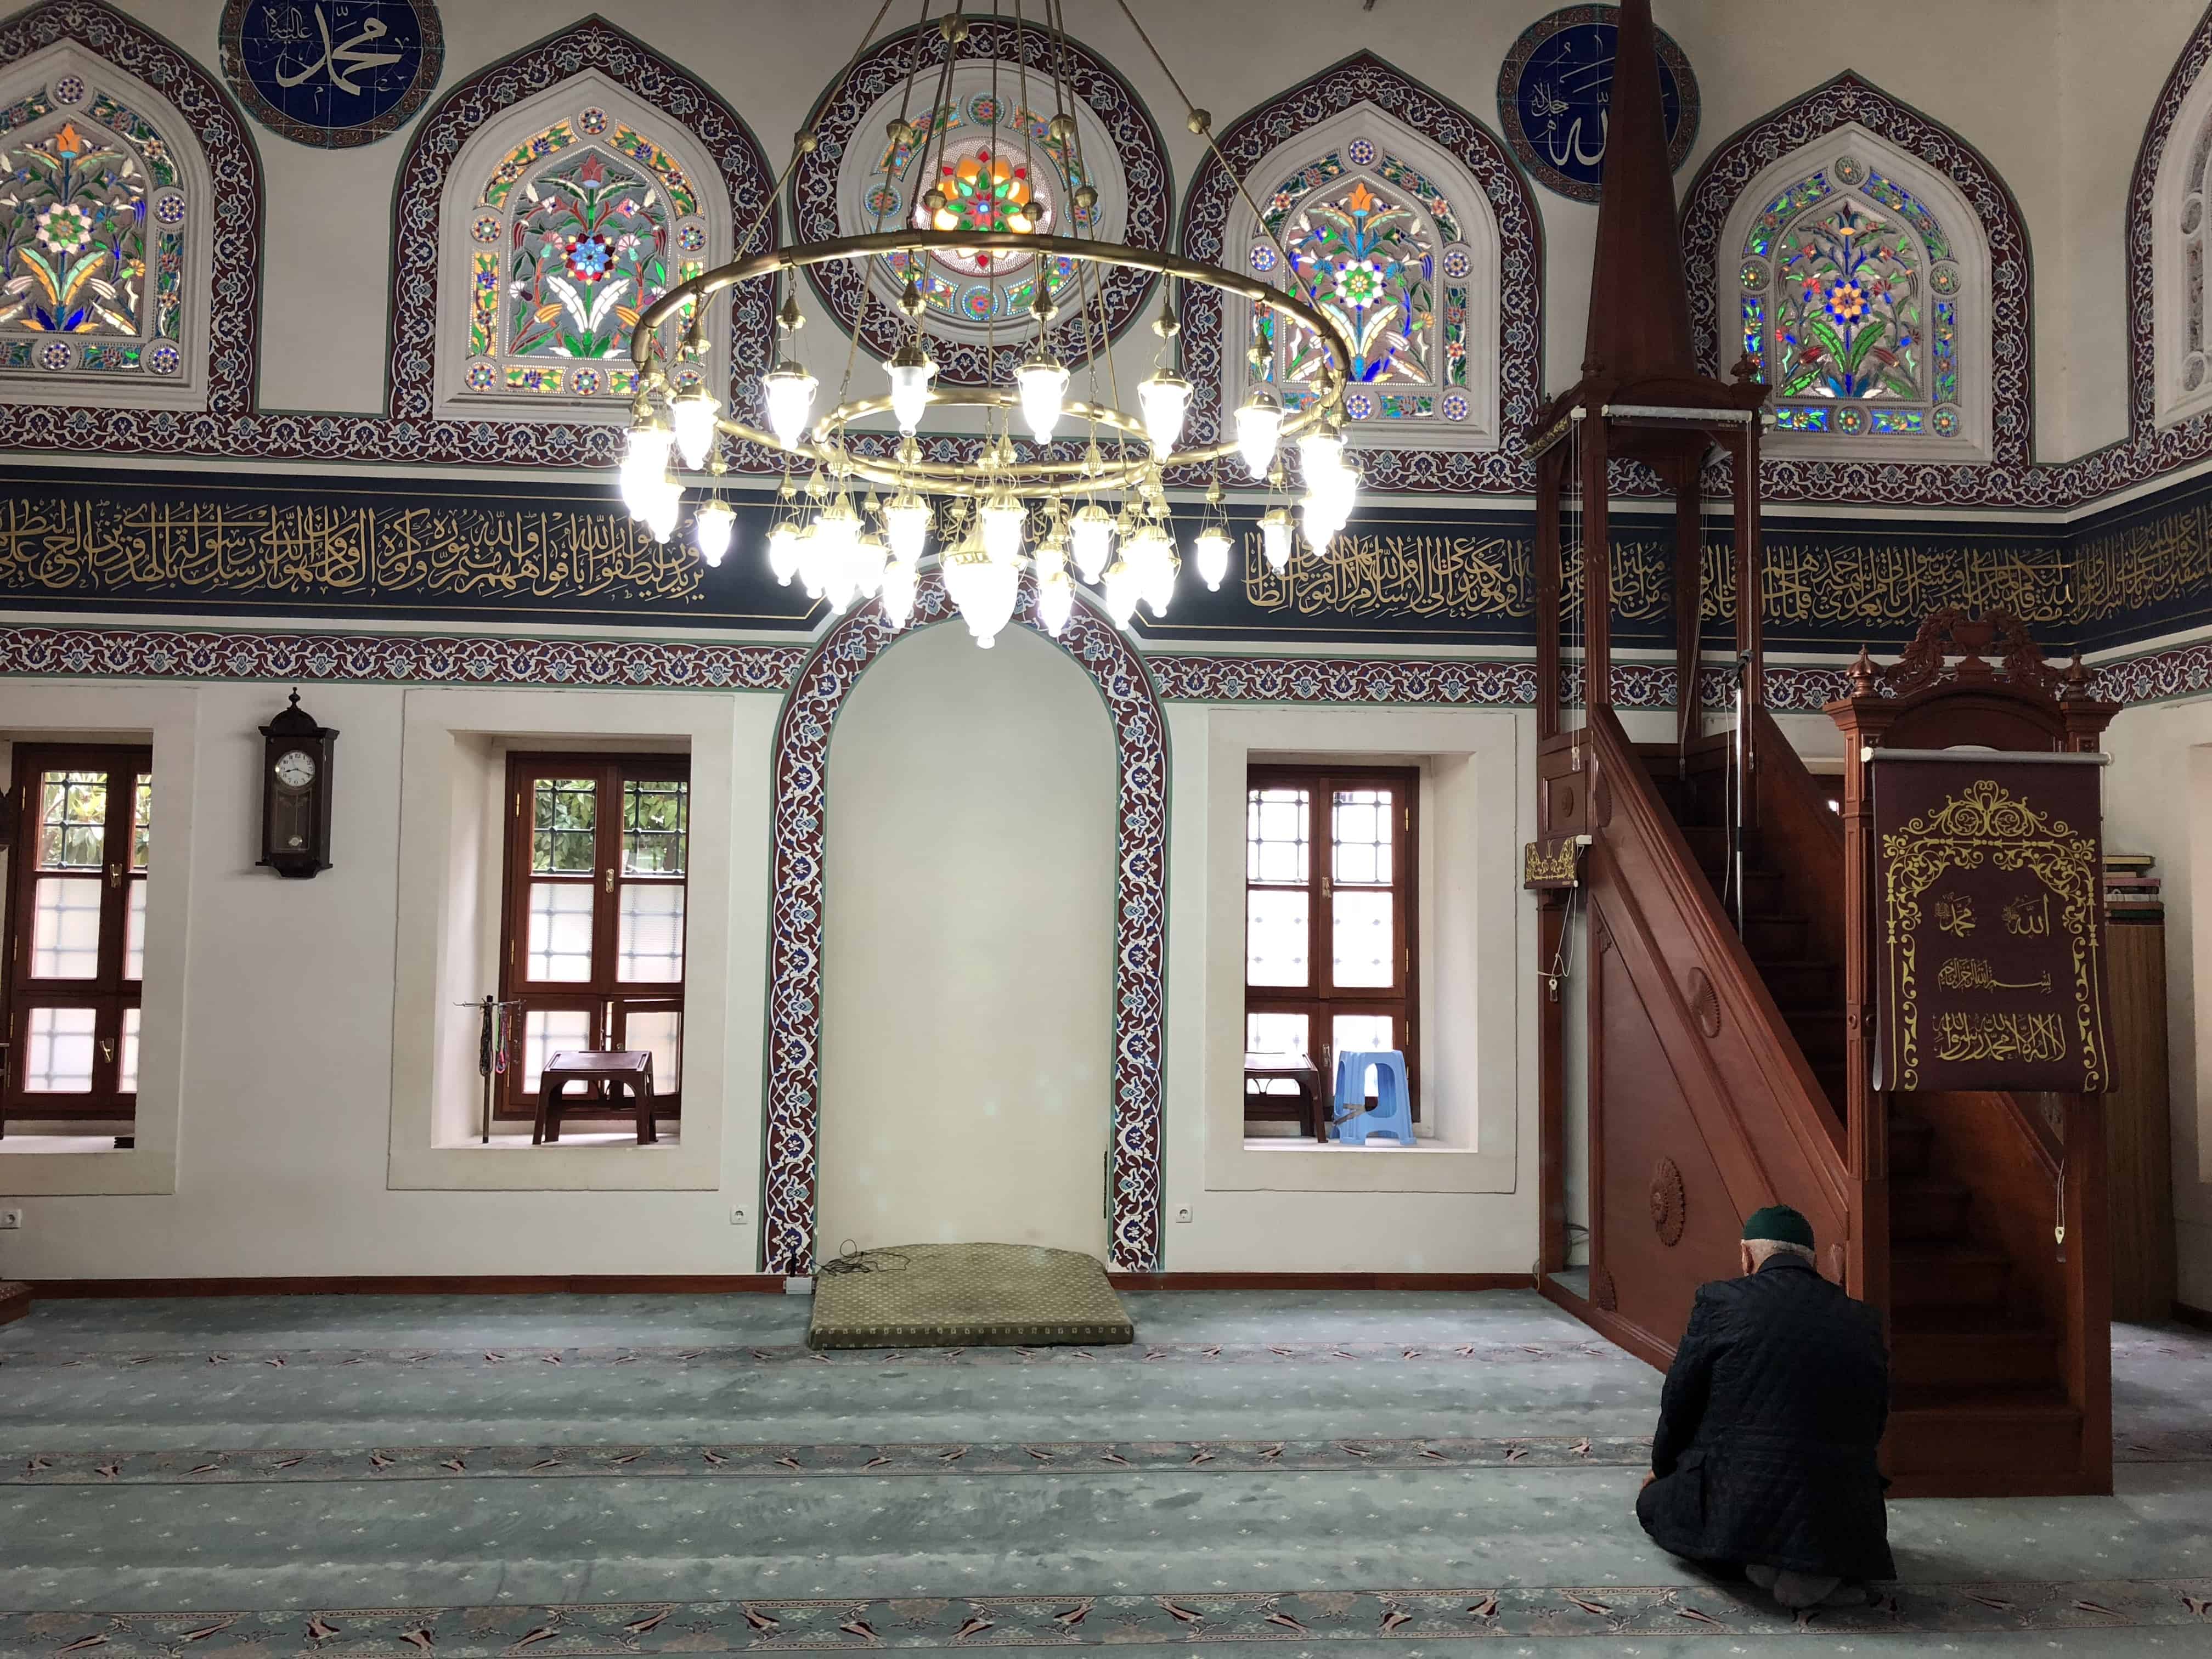 Hüseyin Ağa Mosque on Istiklal Street in Istanbul, Turkey